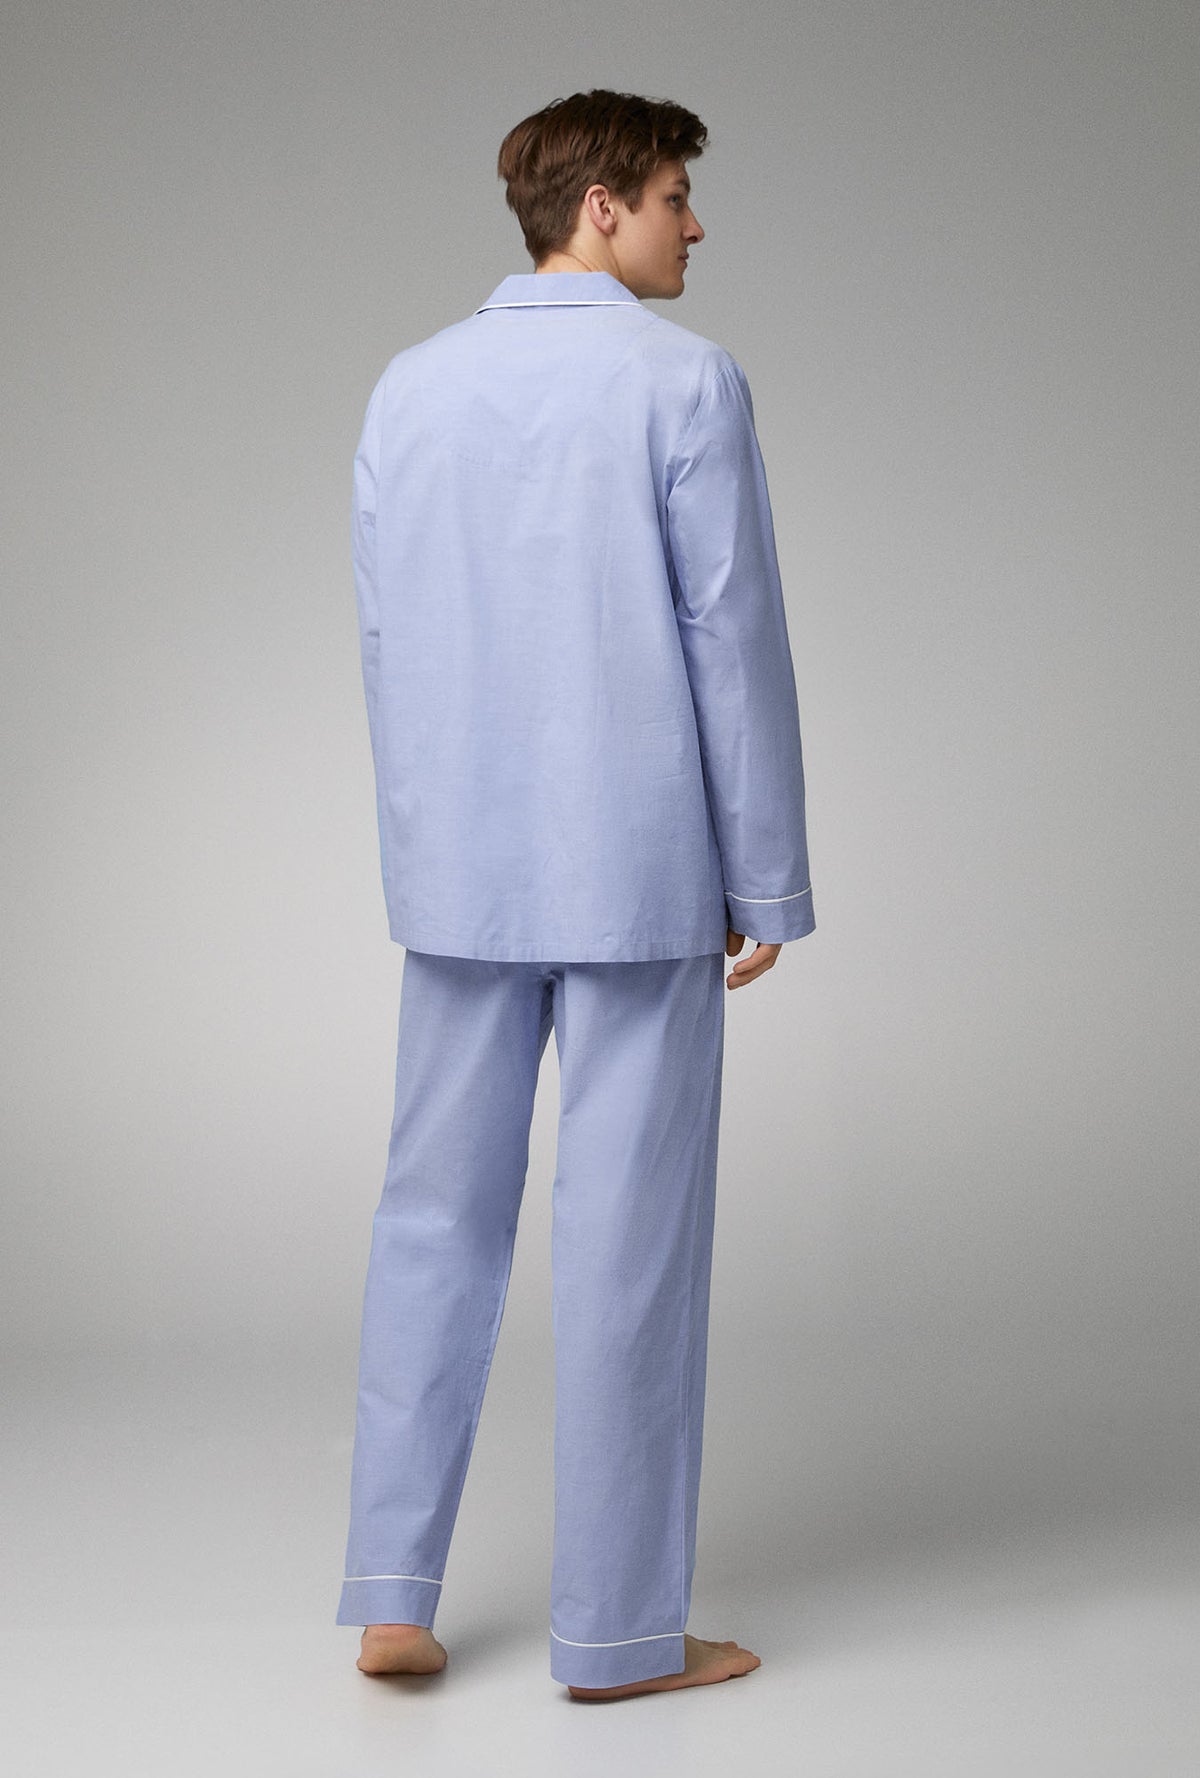 A man wearing blue long sleeve classic woven cotton poplin pj set with chambray print.